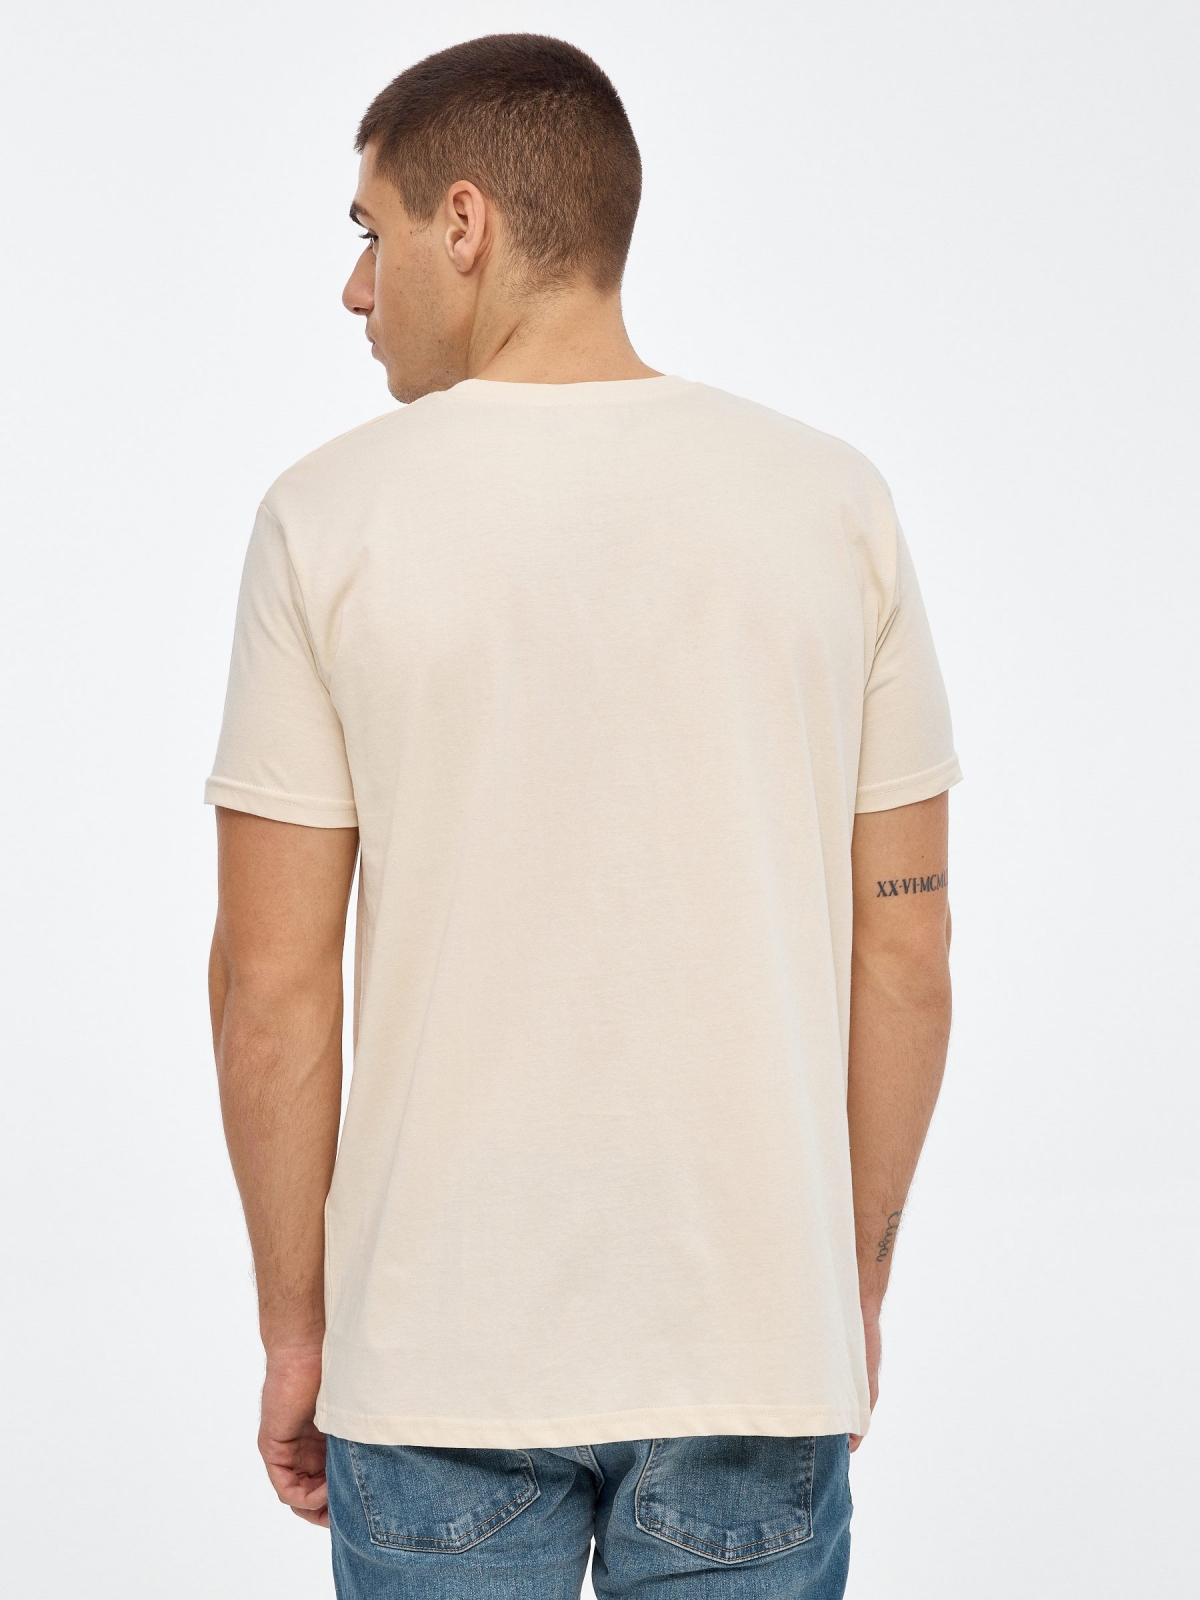 Camiseta estampado calavera arena vista media trasera